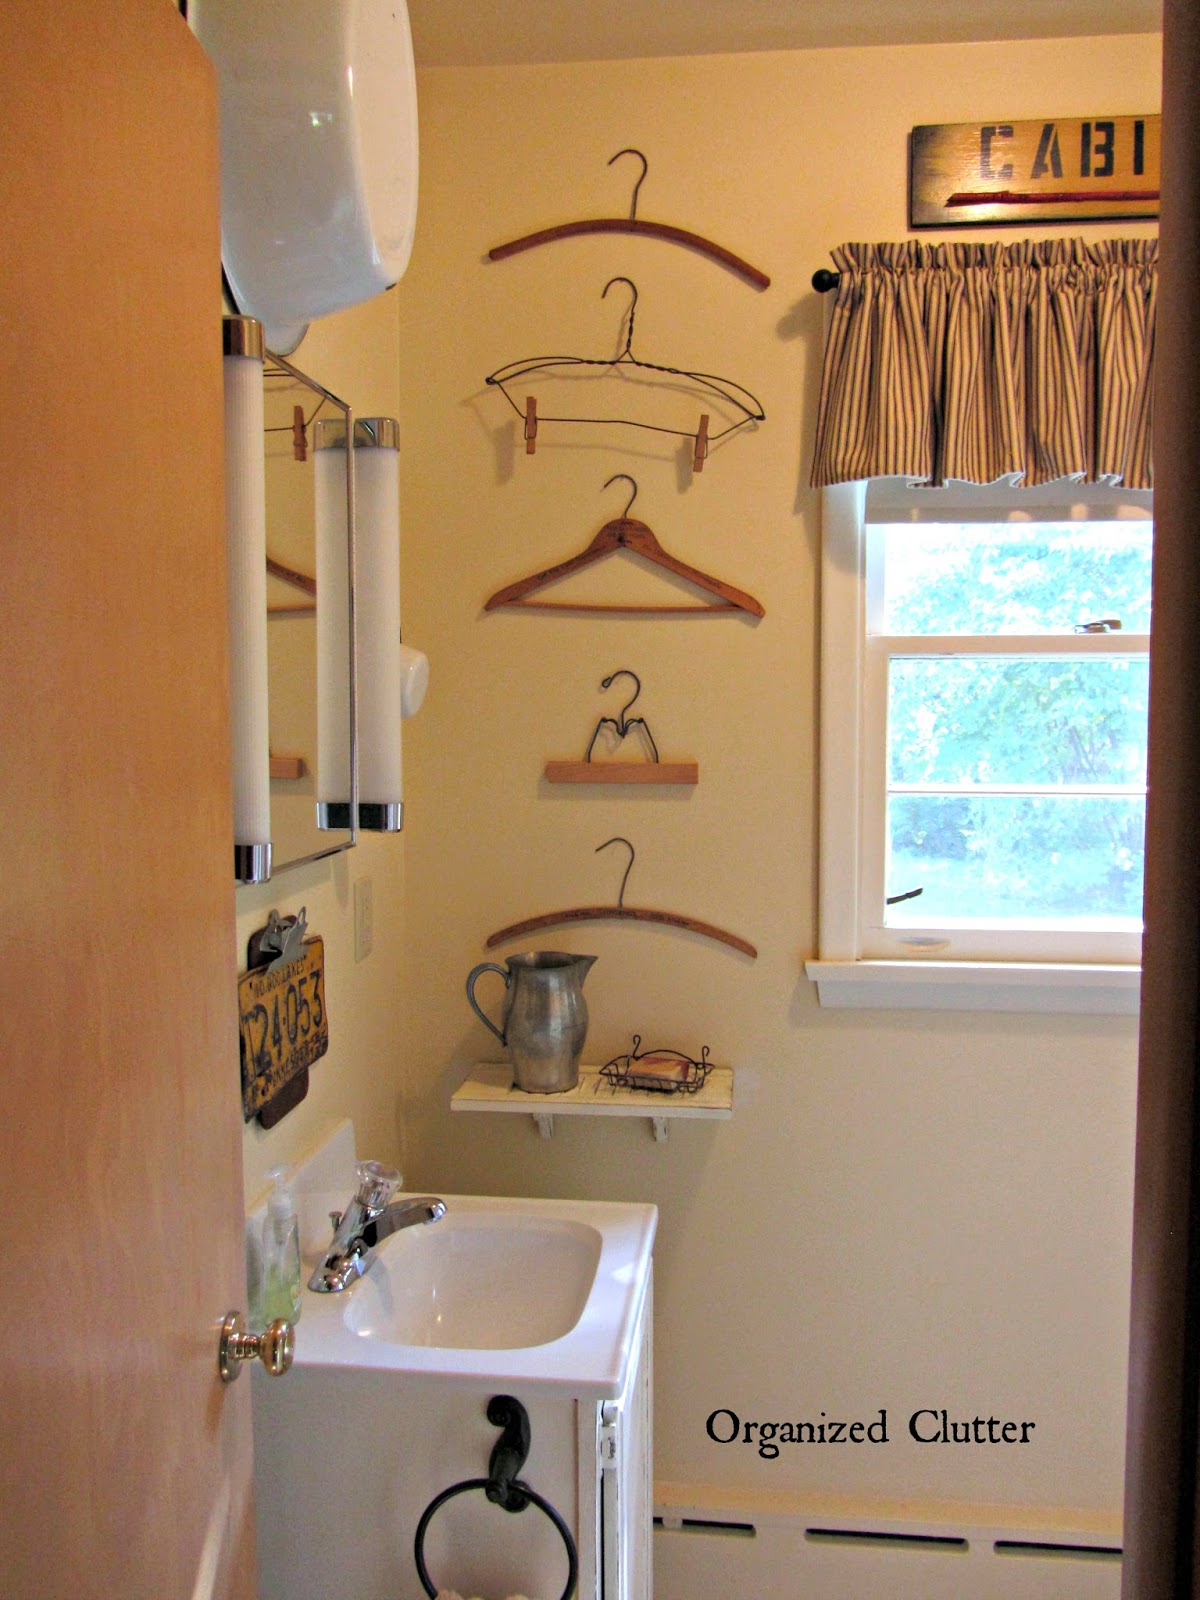 Vintage Rustic Decor in a Small Bathroom www.organizedclutter.queen.blogspot.com